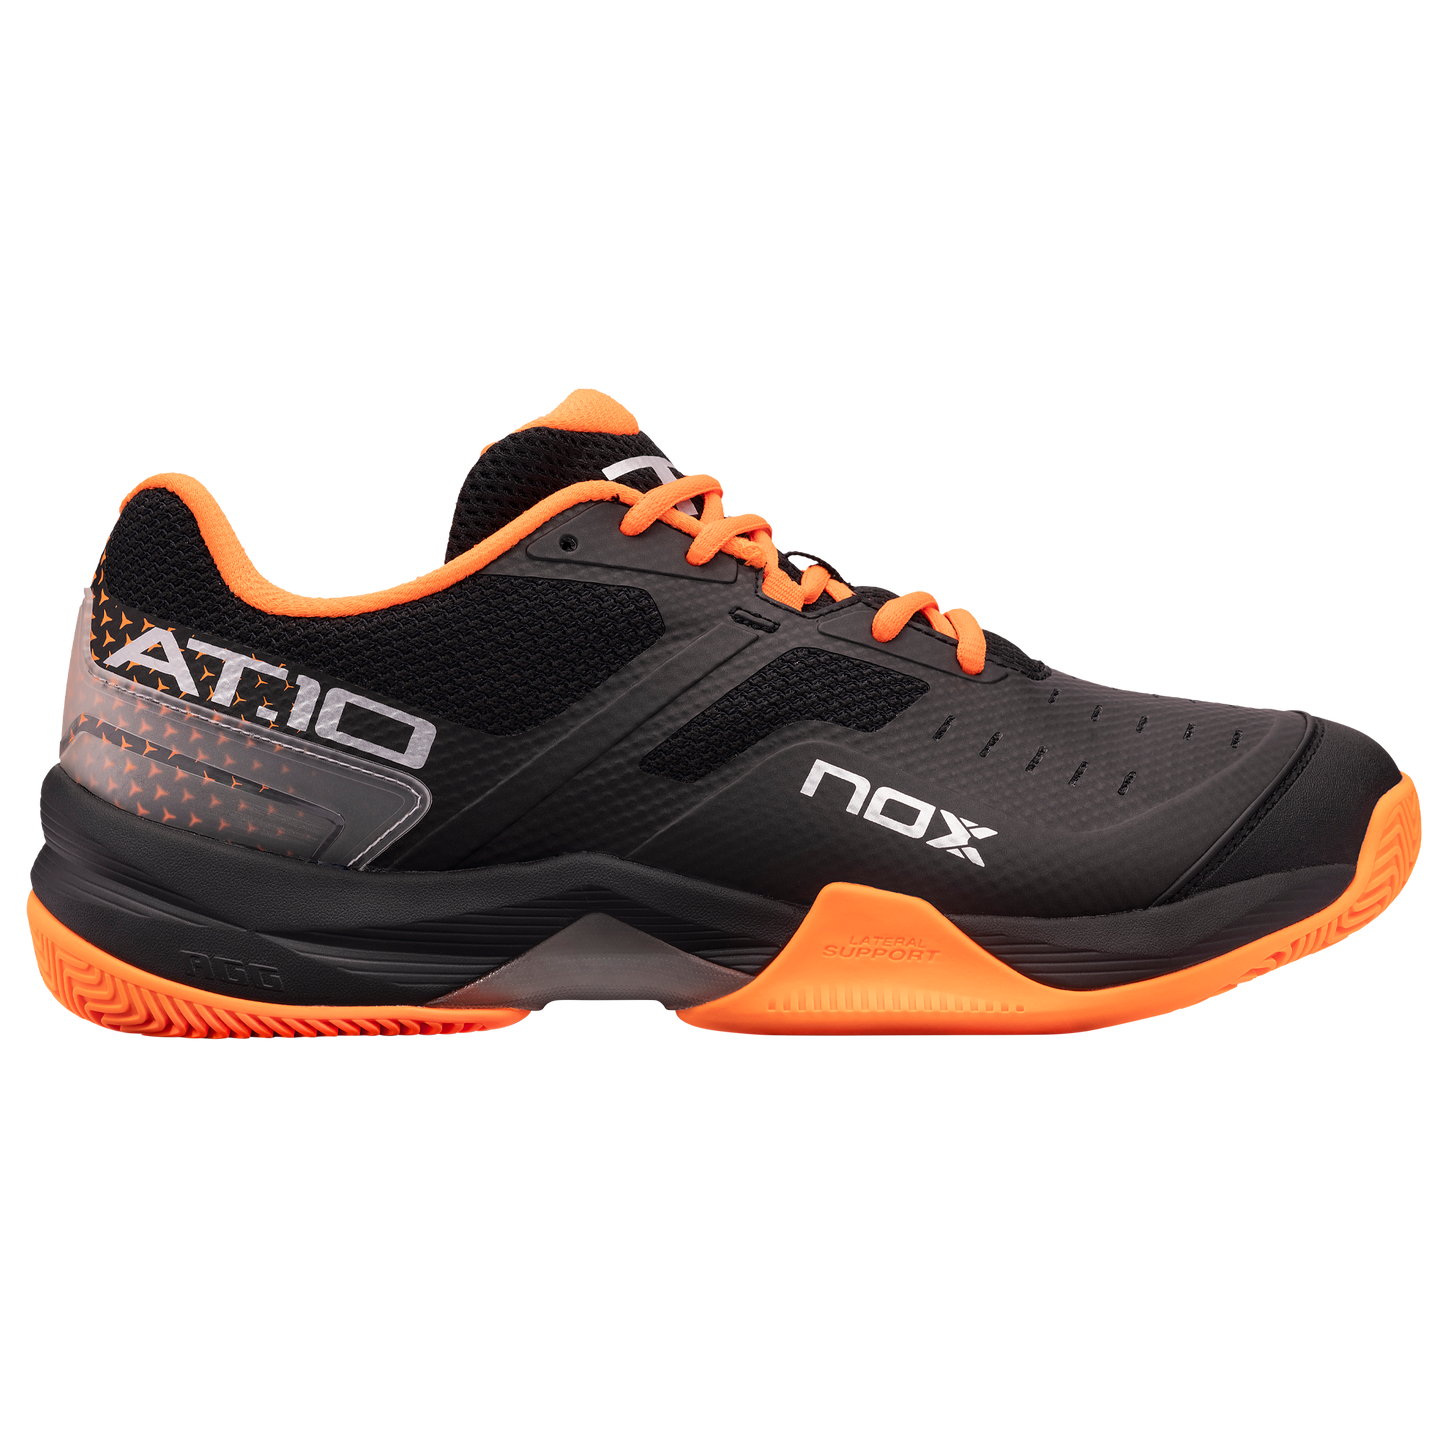 Padel Shoes AT10 Orange